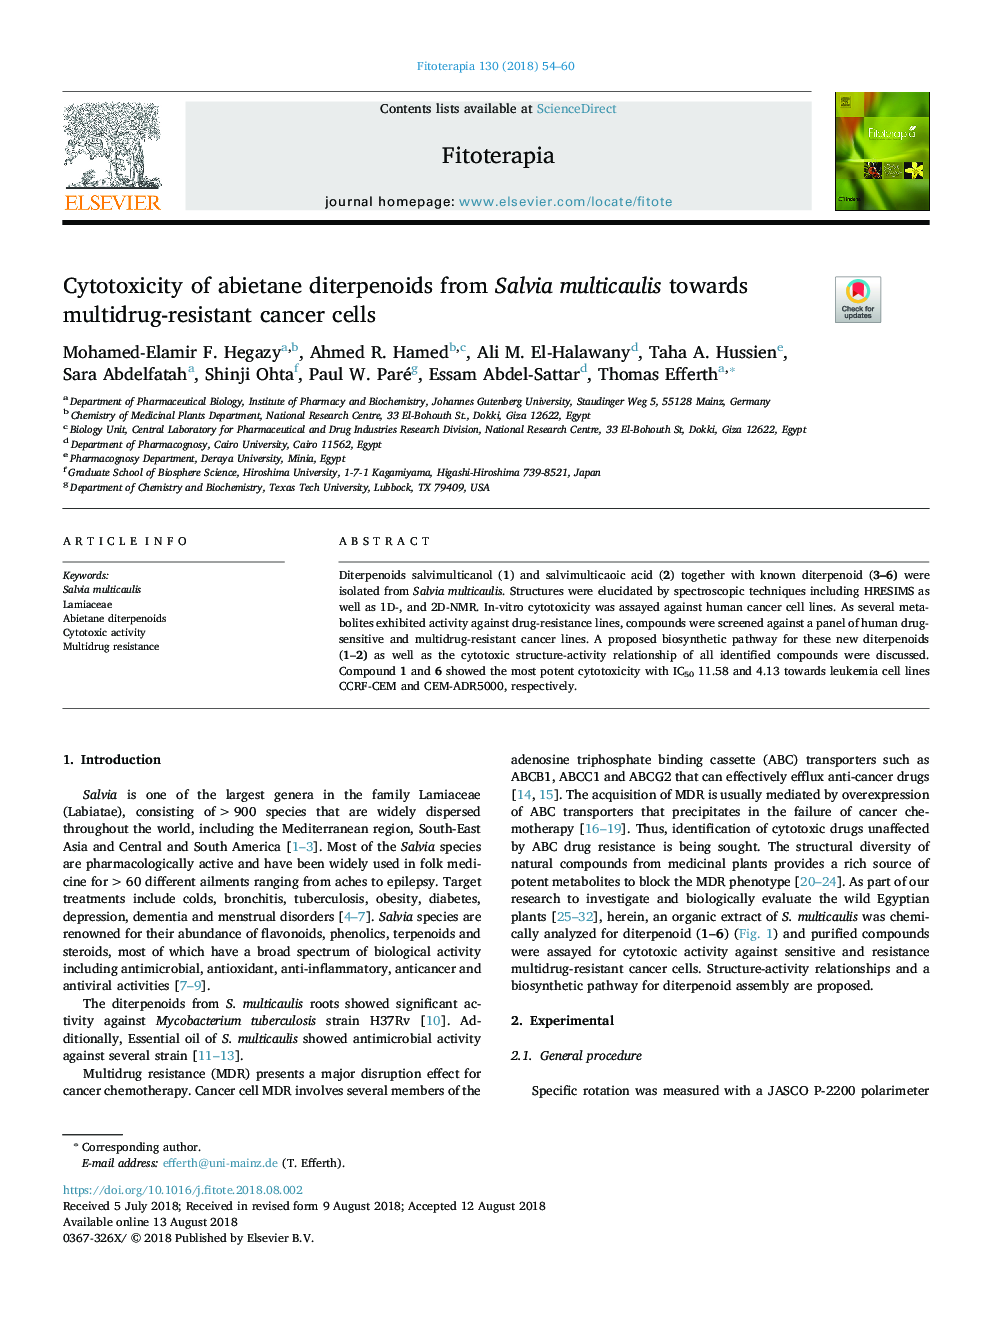 Cytotoxicity of abietane diterpenoids from Salvia multicaulis towards multidrug-resistant cancer cells